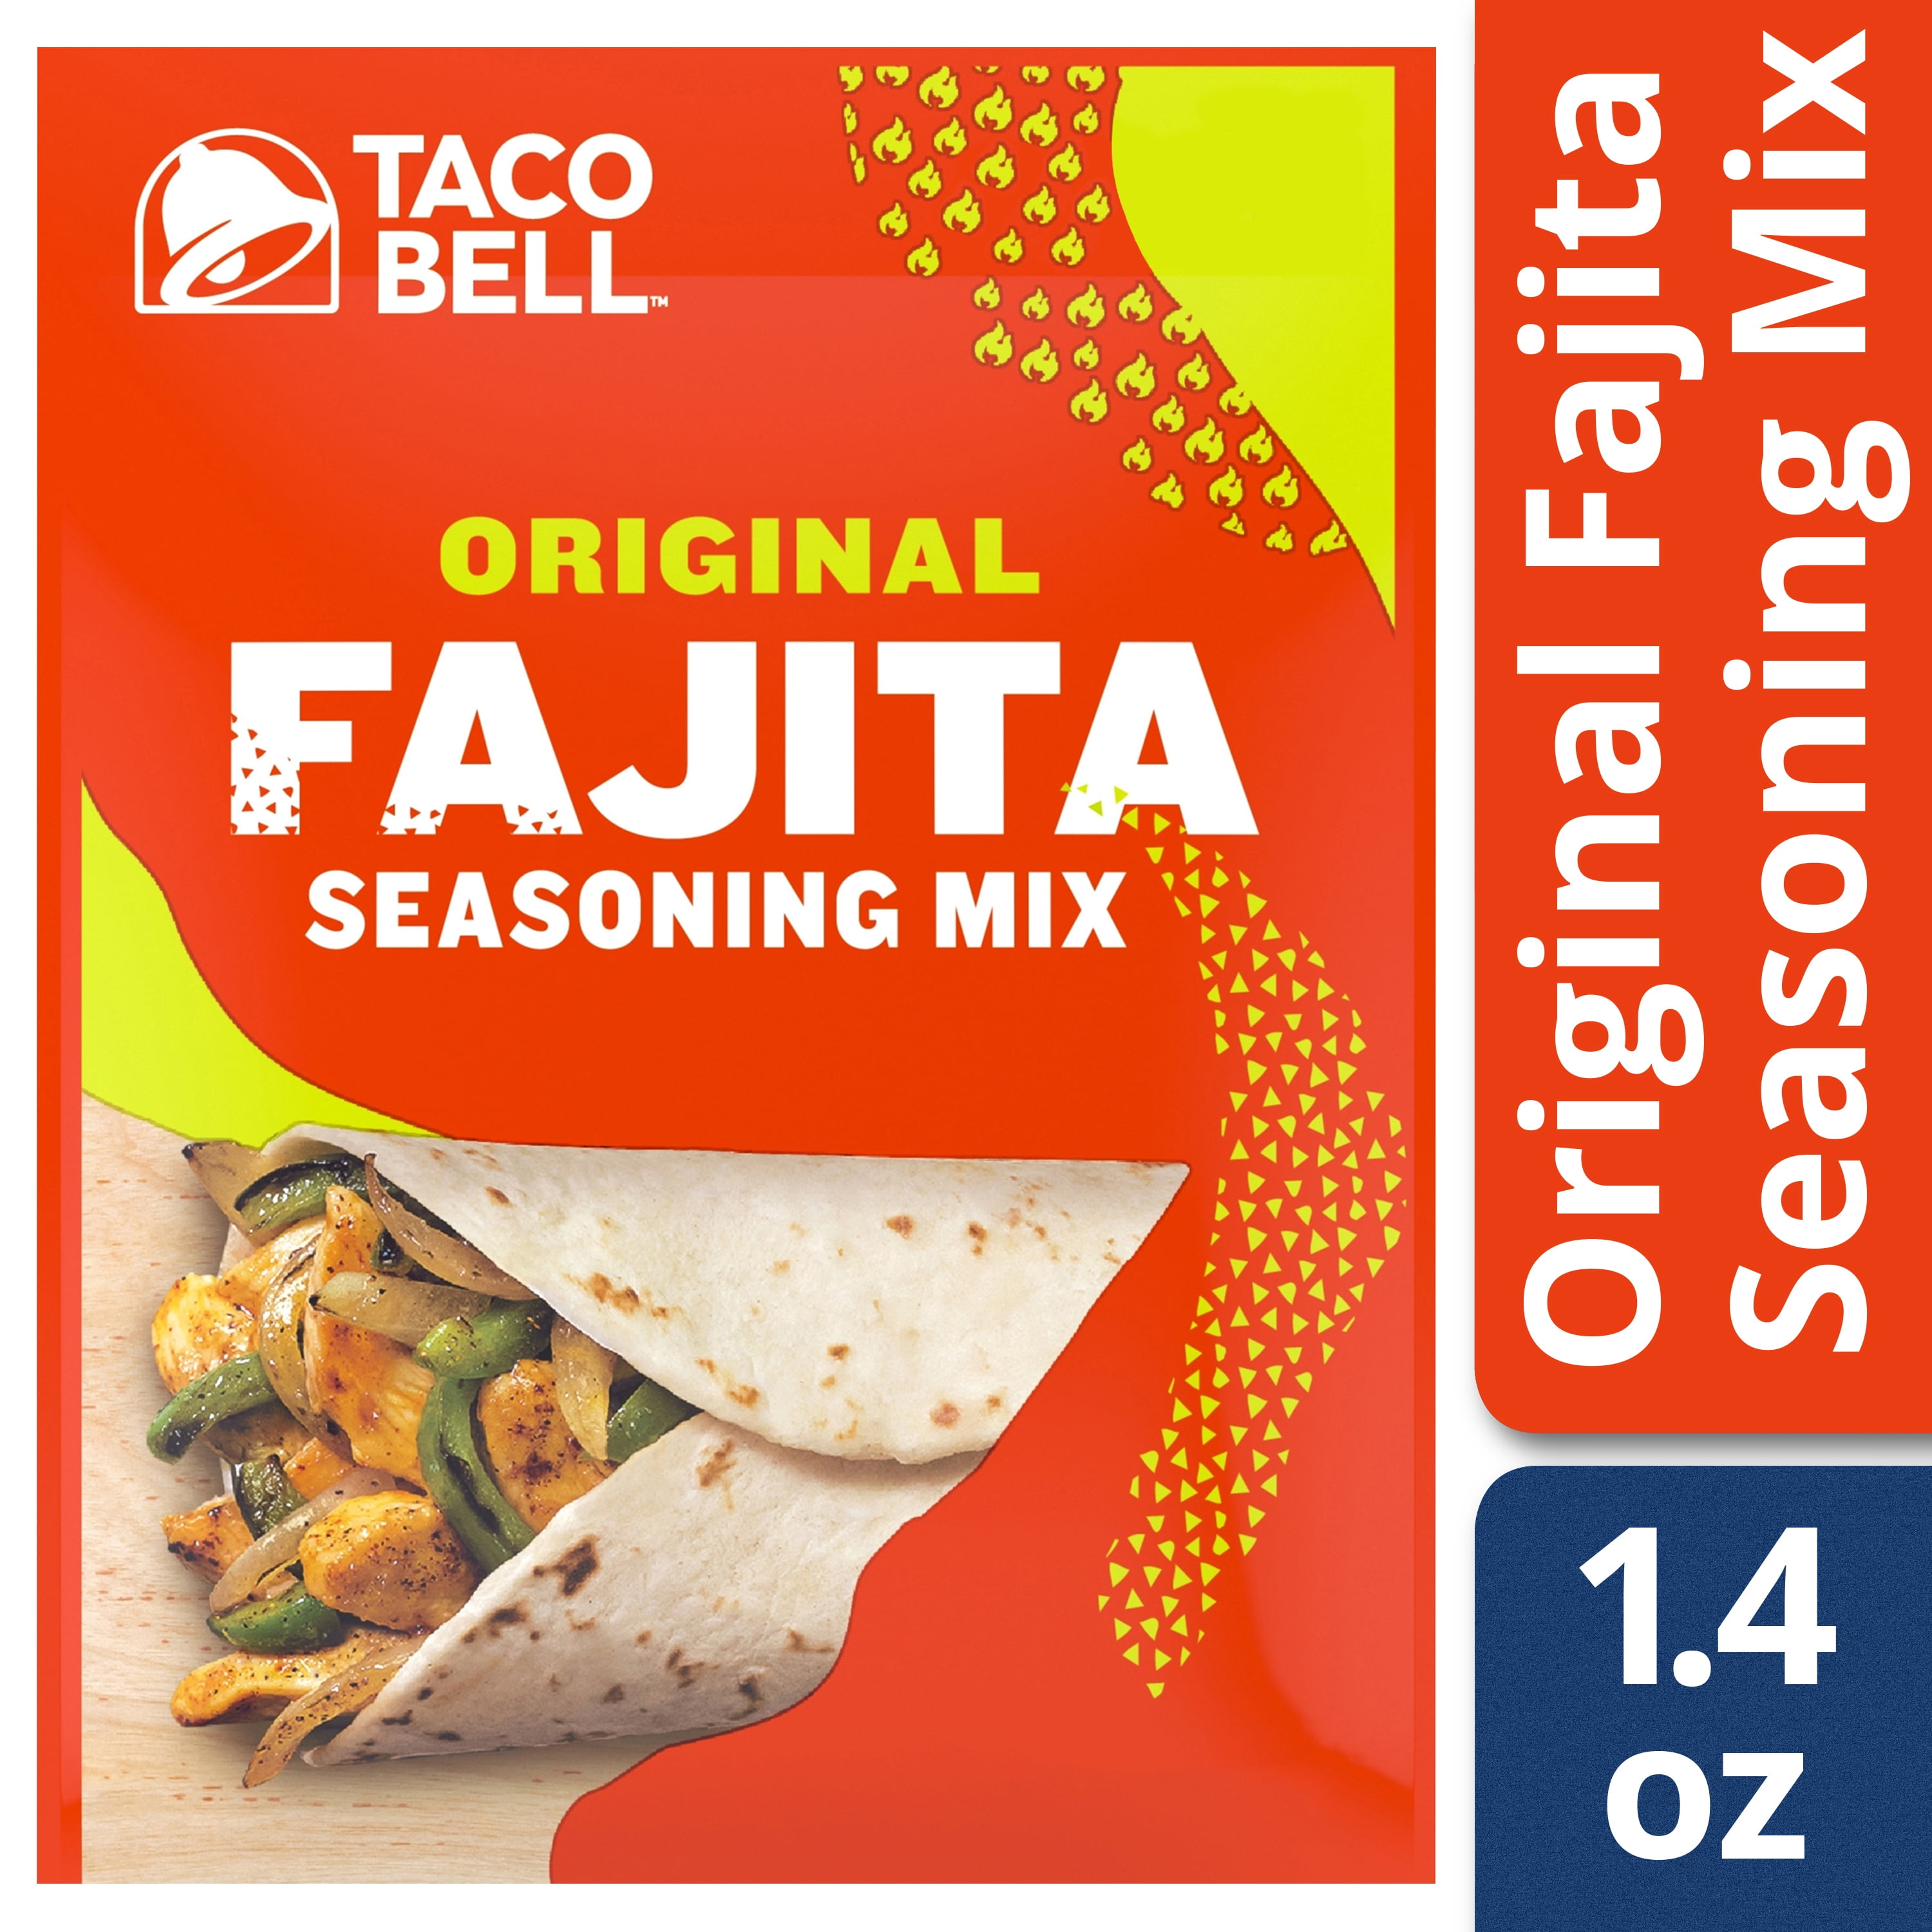 Taco Bell Original Fajita Seasoning Mix 14 Oz Envelope 5393